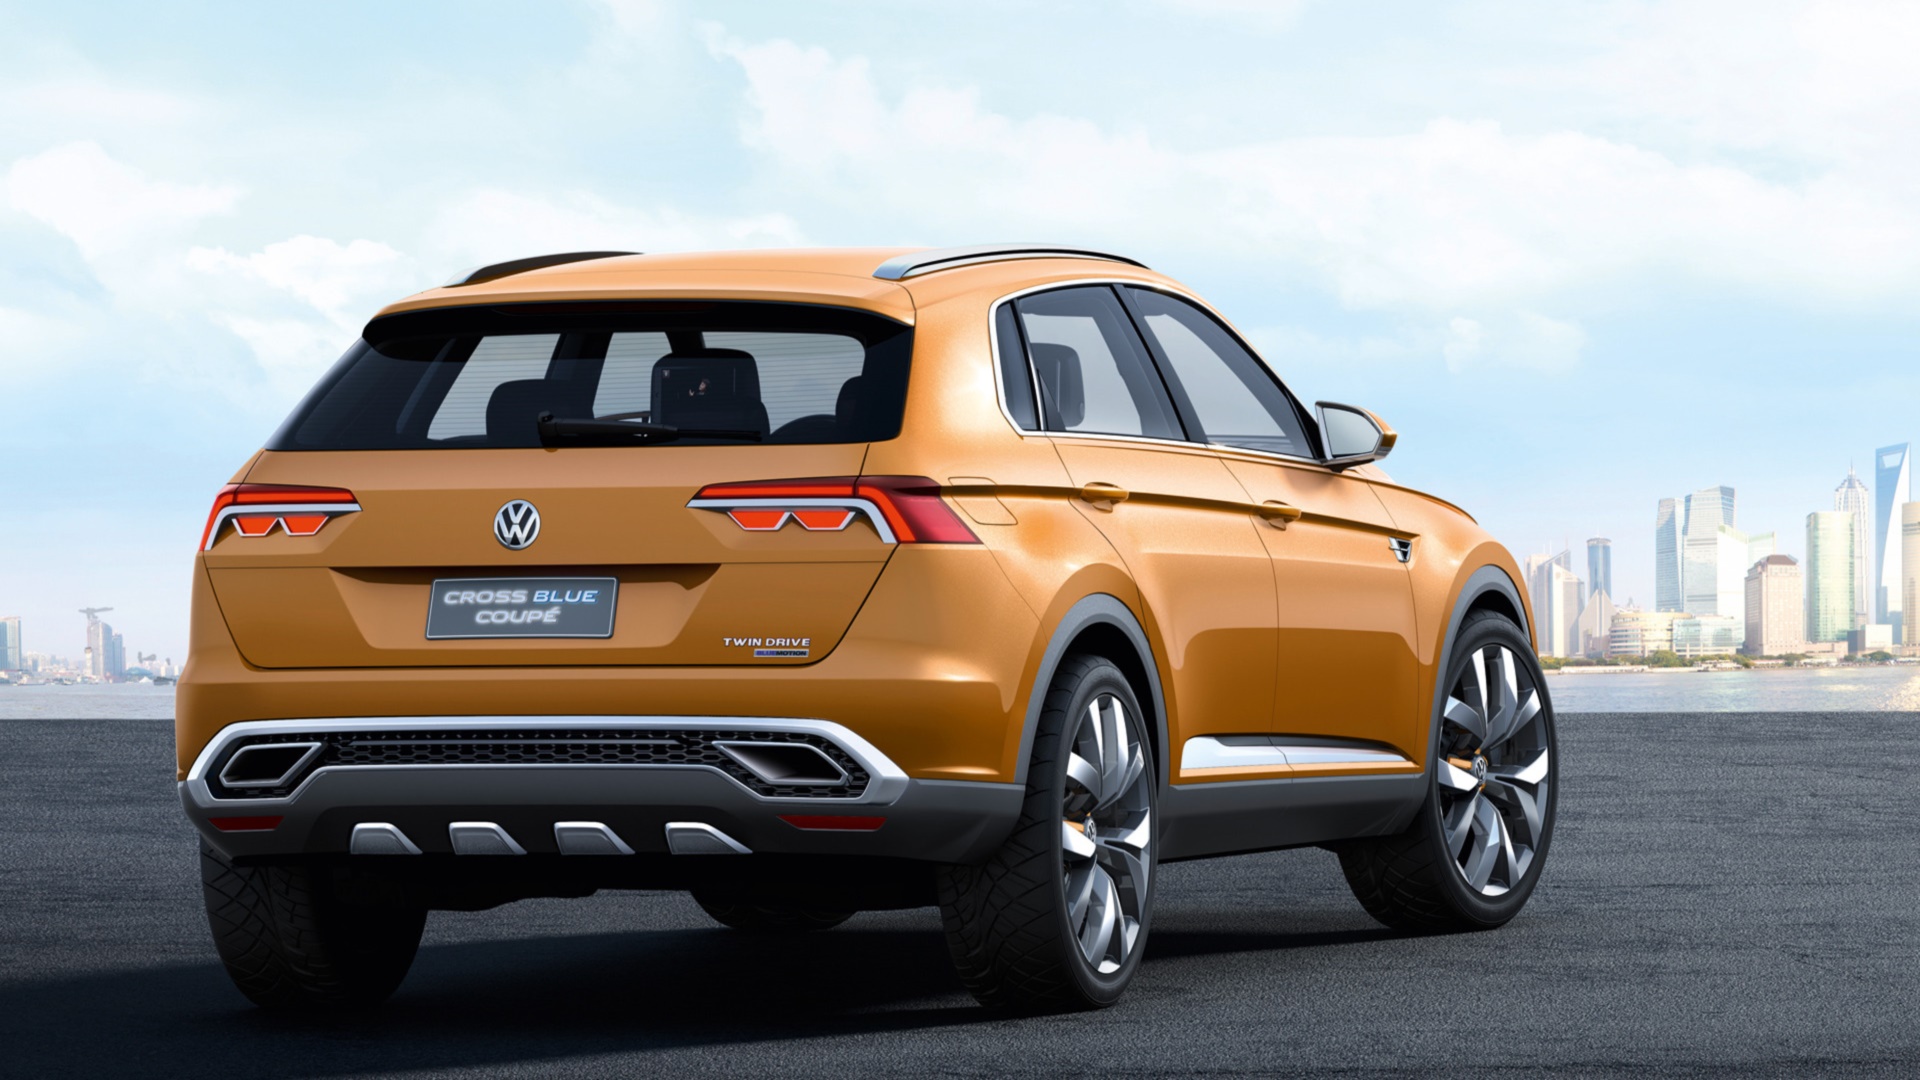 Завантажити шпалери Volkswagen Crossblue на телефон безкоштовно